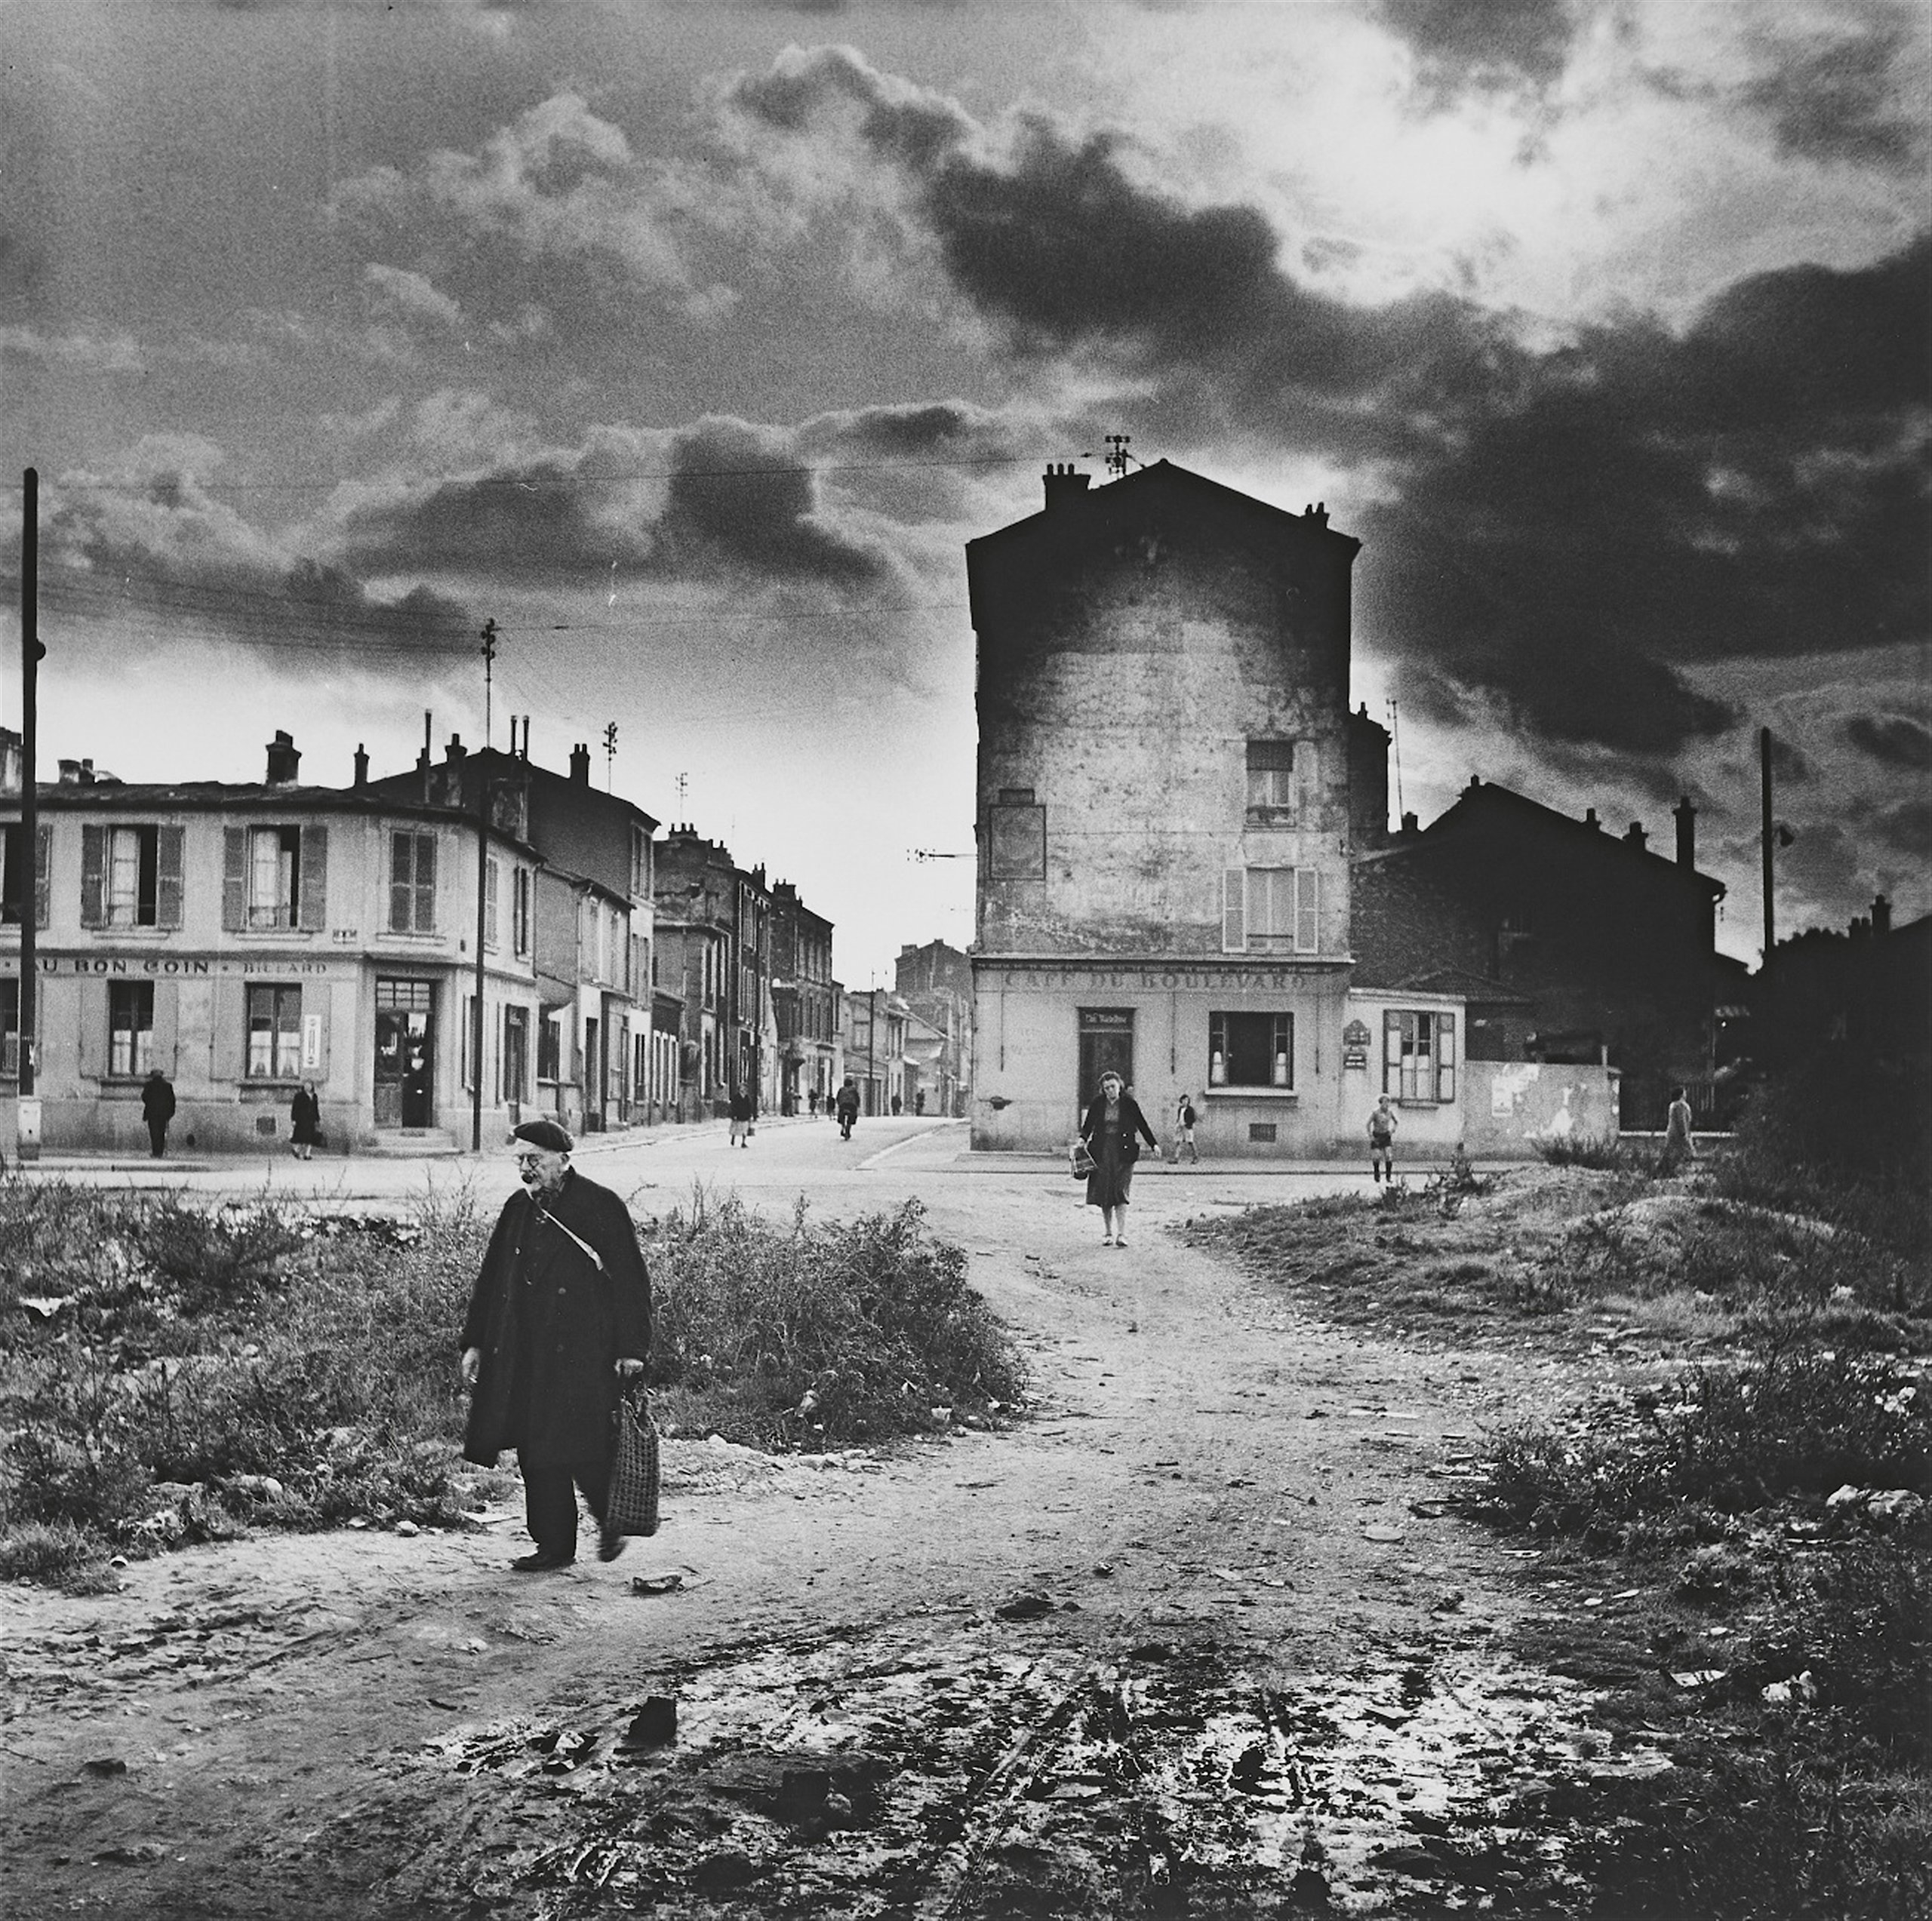  Pauvre banlieue Paris by Herbert Tobias, 1951